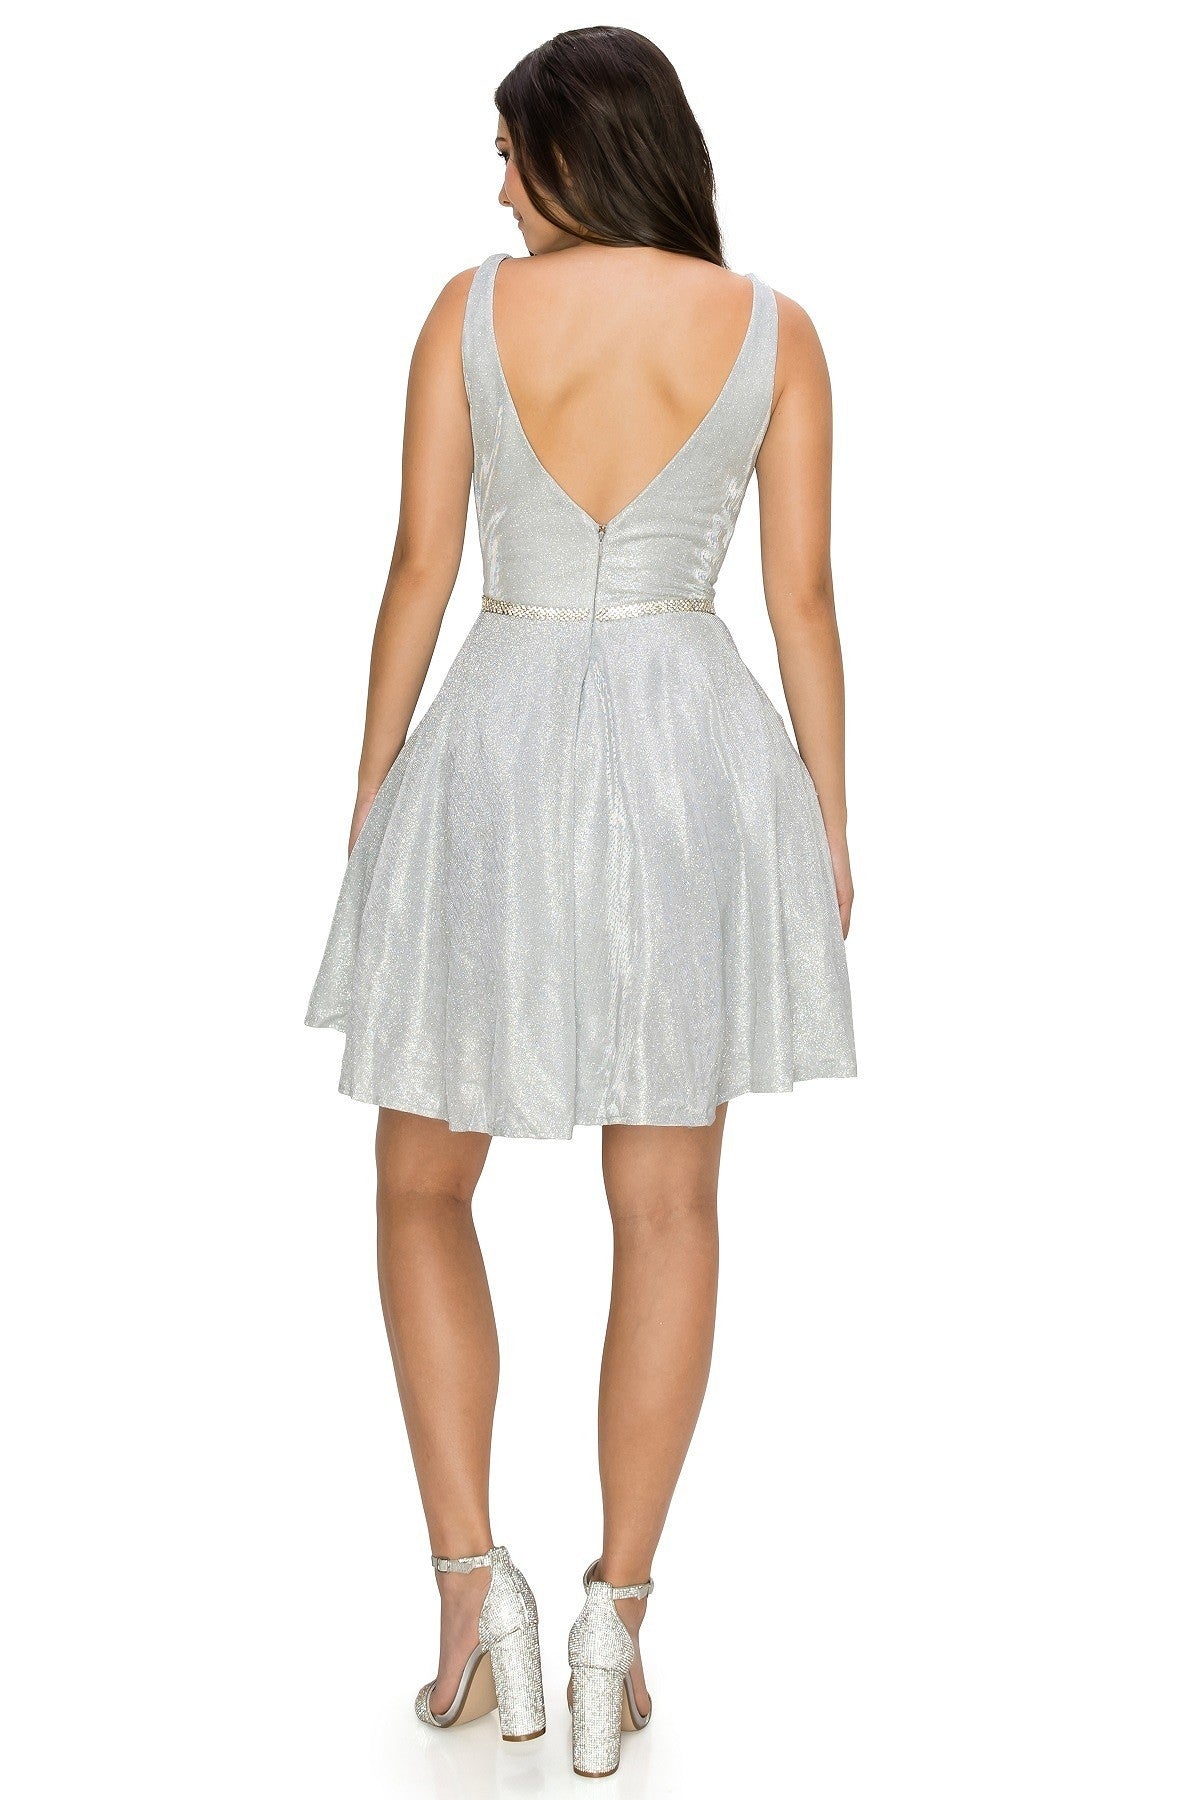 Mattalic Party Short Dress Cinderella Couture USA AS8013J-SILVER